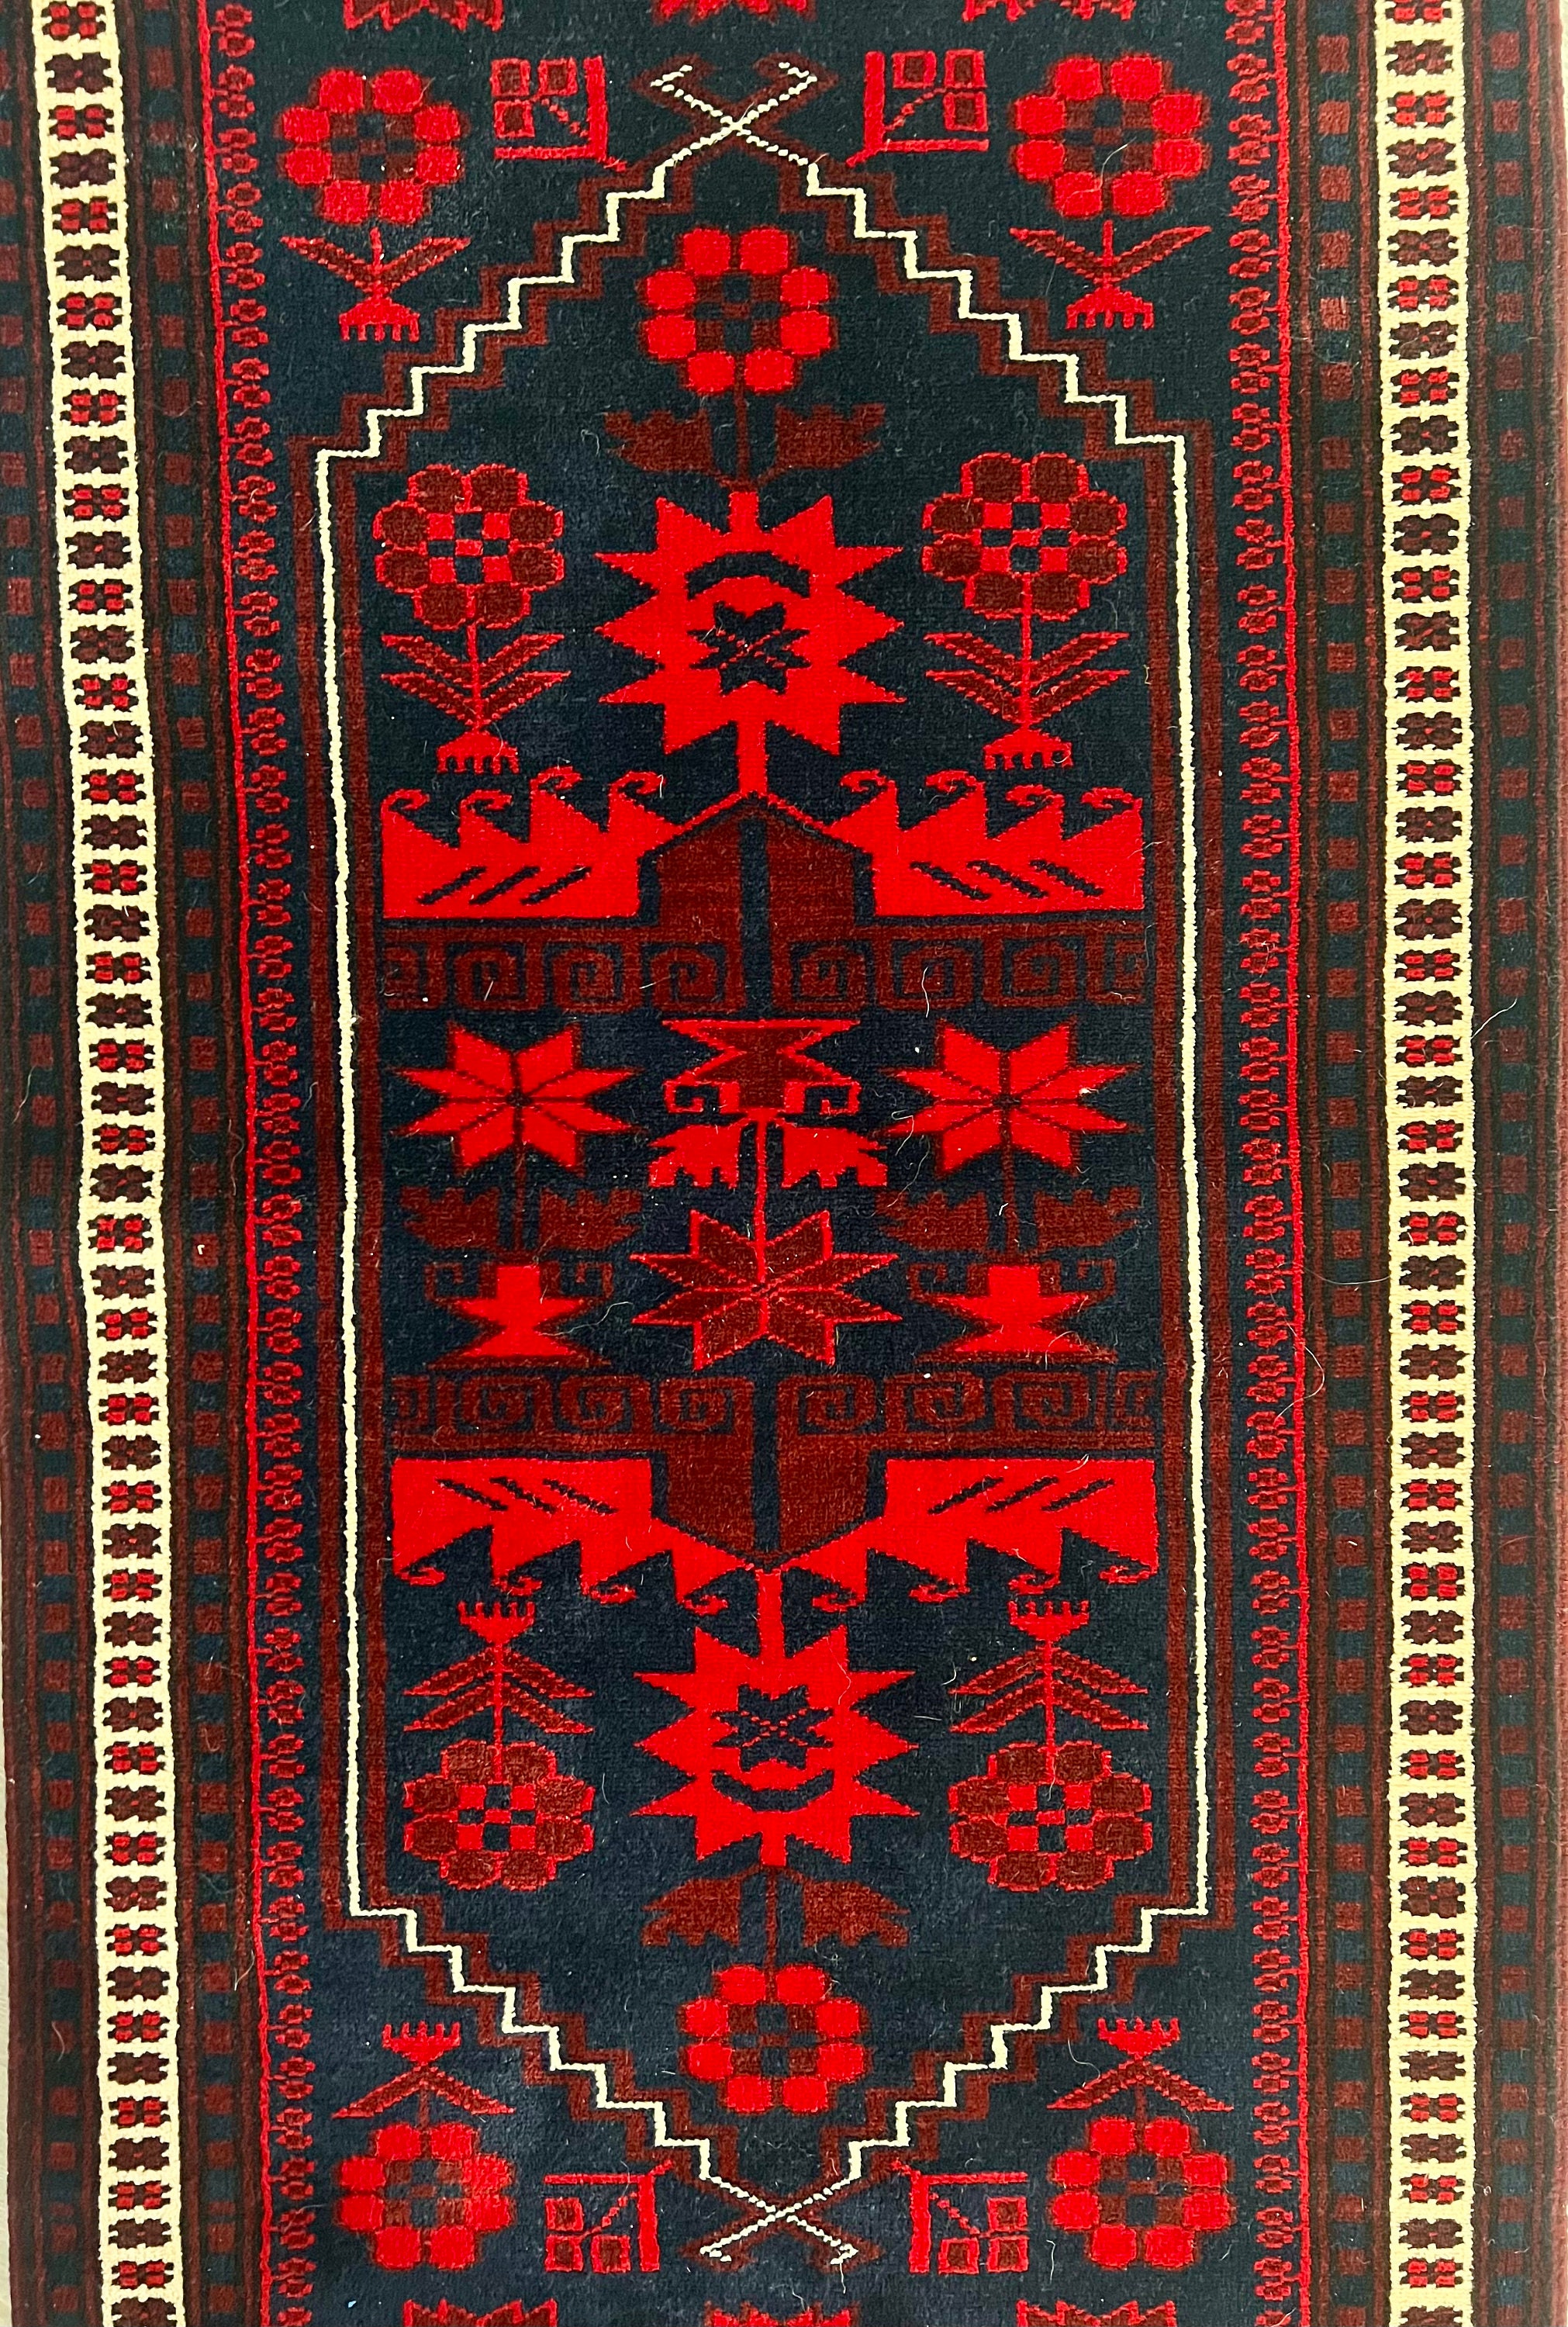 Cream Non-Slip Rug Pad 4'8x7'6 - Oriental Weavers